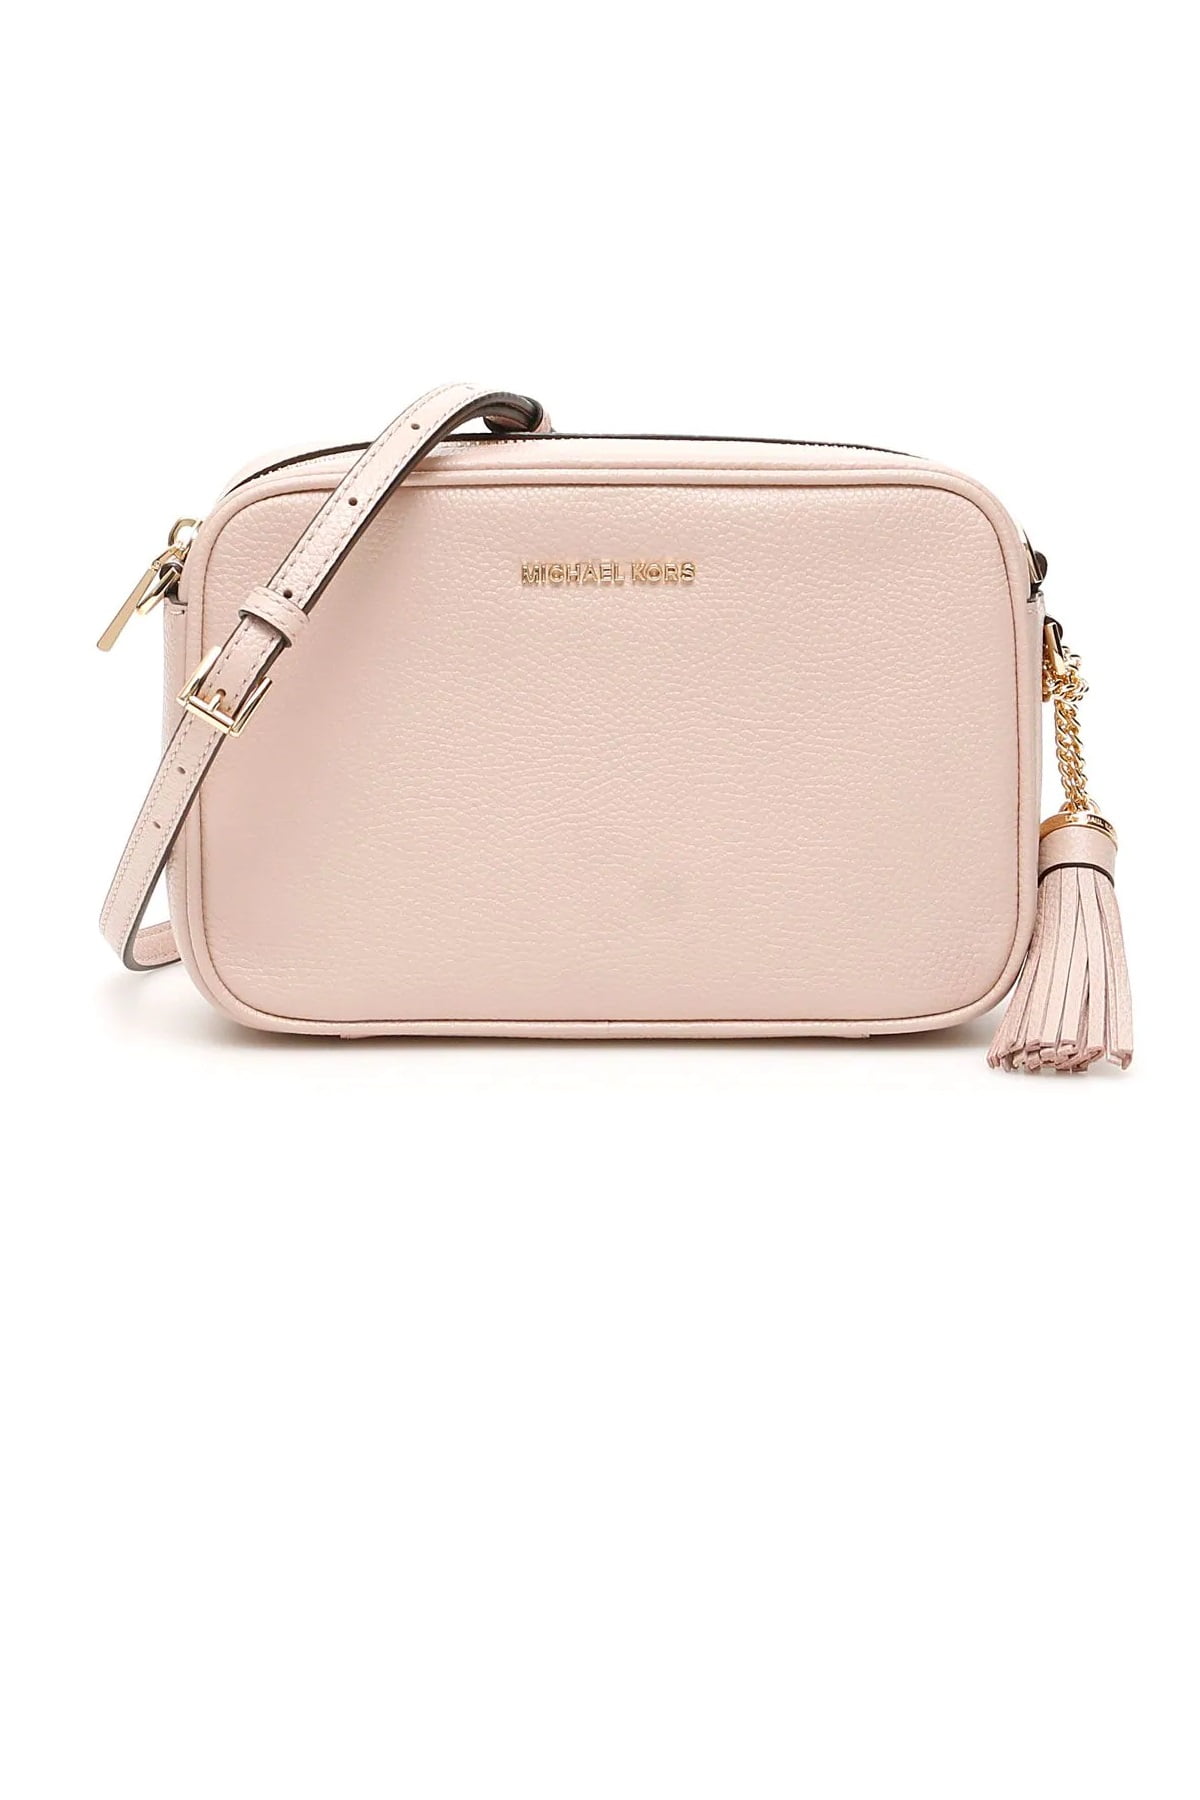 Michael Kors Ginny Ladies Small Soft Pink Leather Crossbody Bag  32F7GGNM8L187 